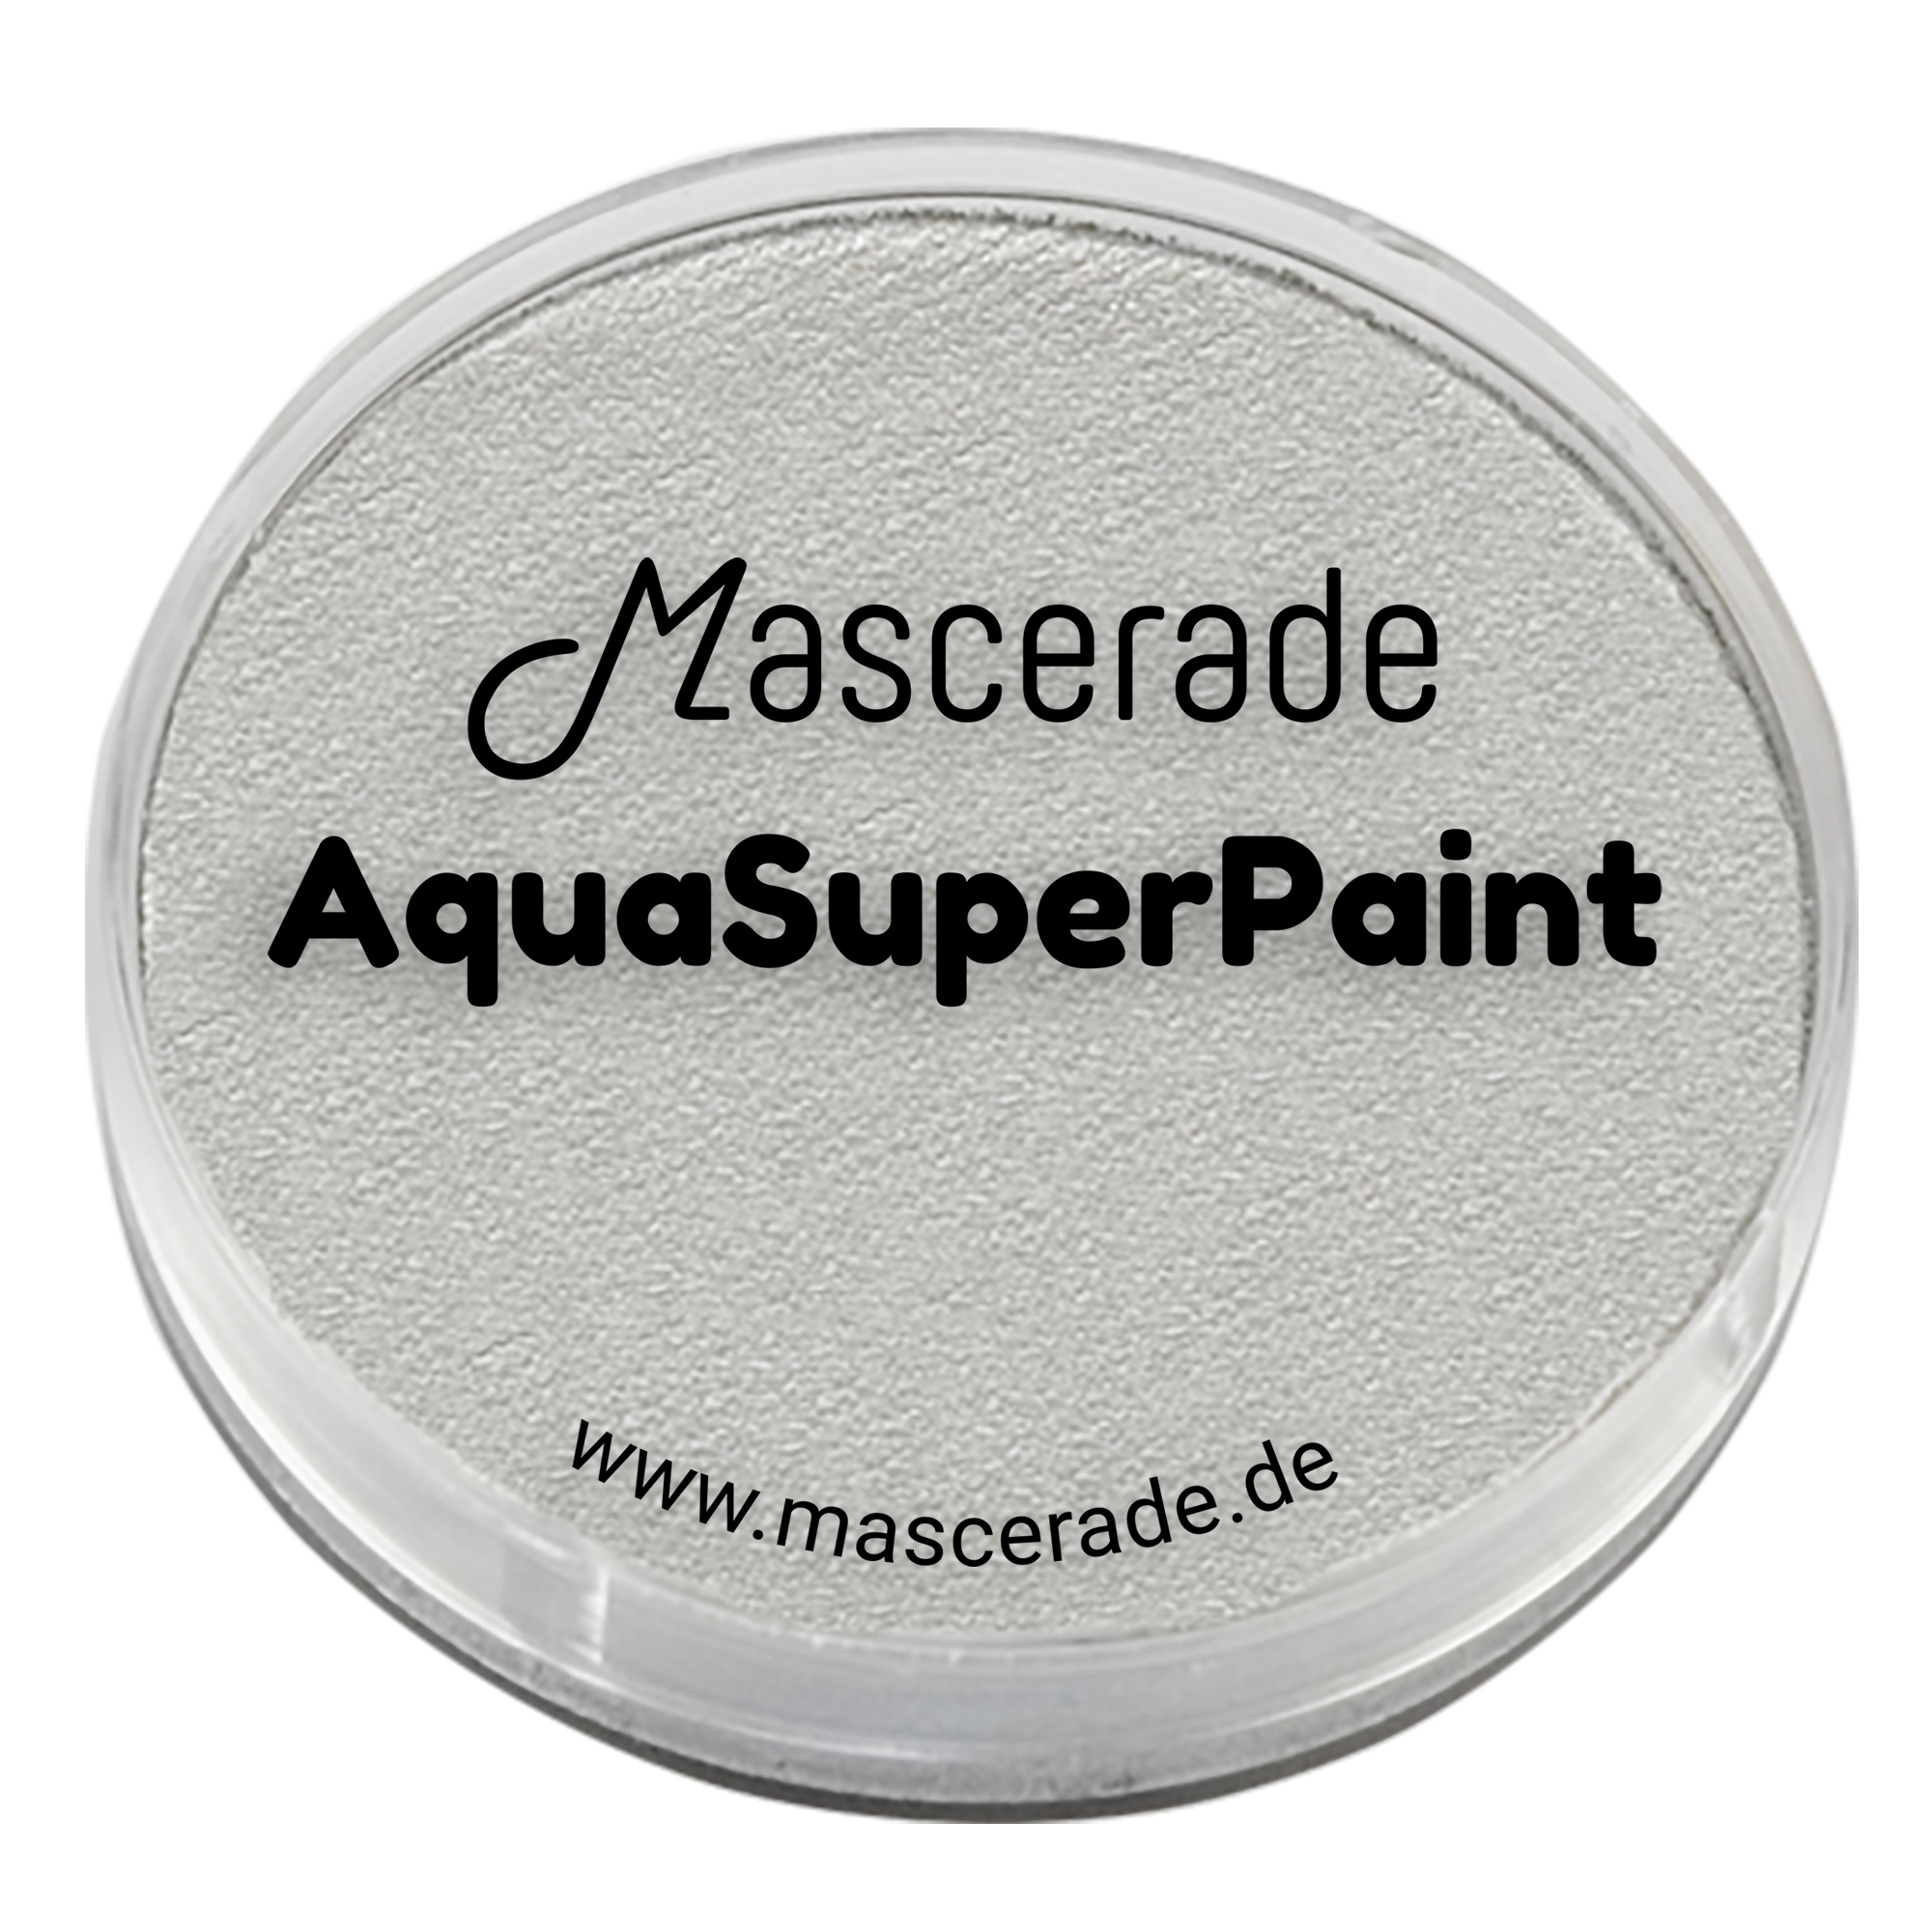 Mascerade AquaSuperPaint 30 ml Dose, Silber mit Perlglanz_silver.pearl